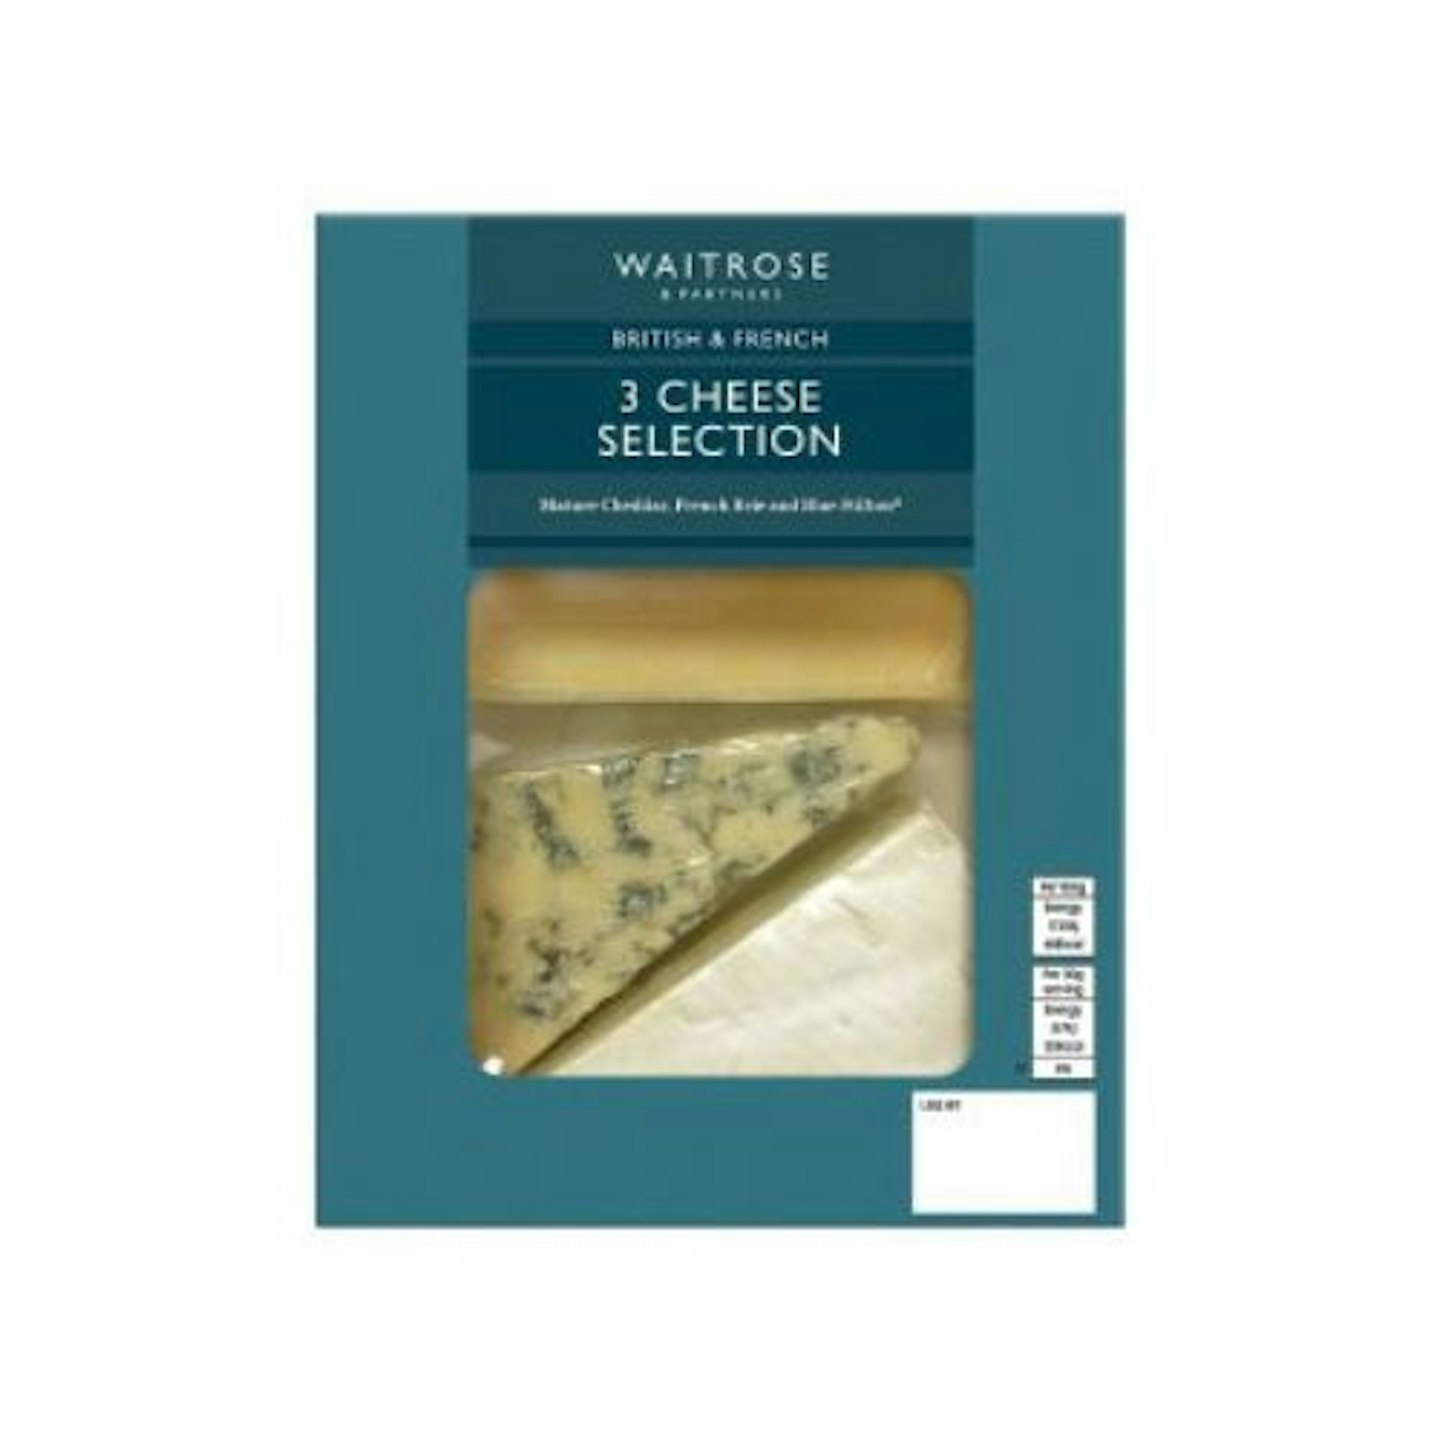 Waitrose British & French 3 Cheese Selection